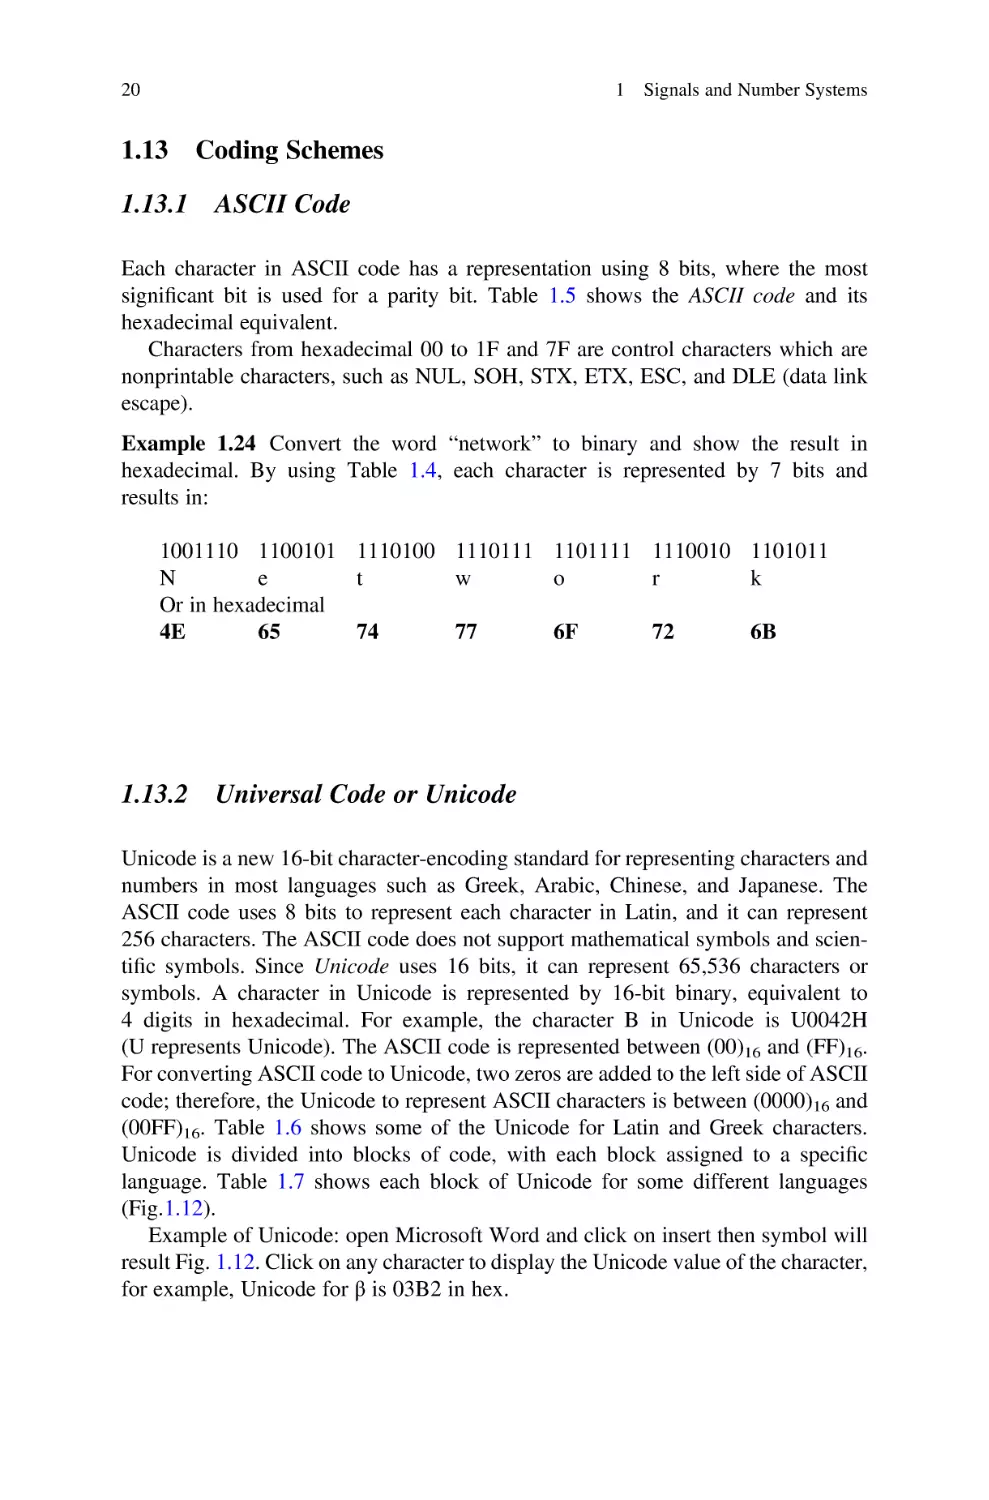 1.13 Coding Schemes
1.13.1 ASCII Code
1.13.2 Universal Code or Unicode